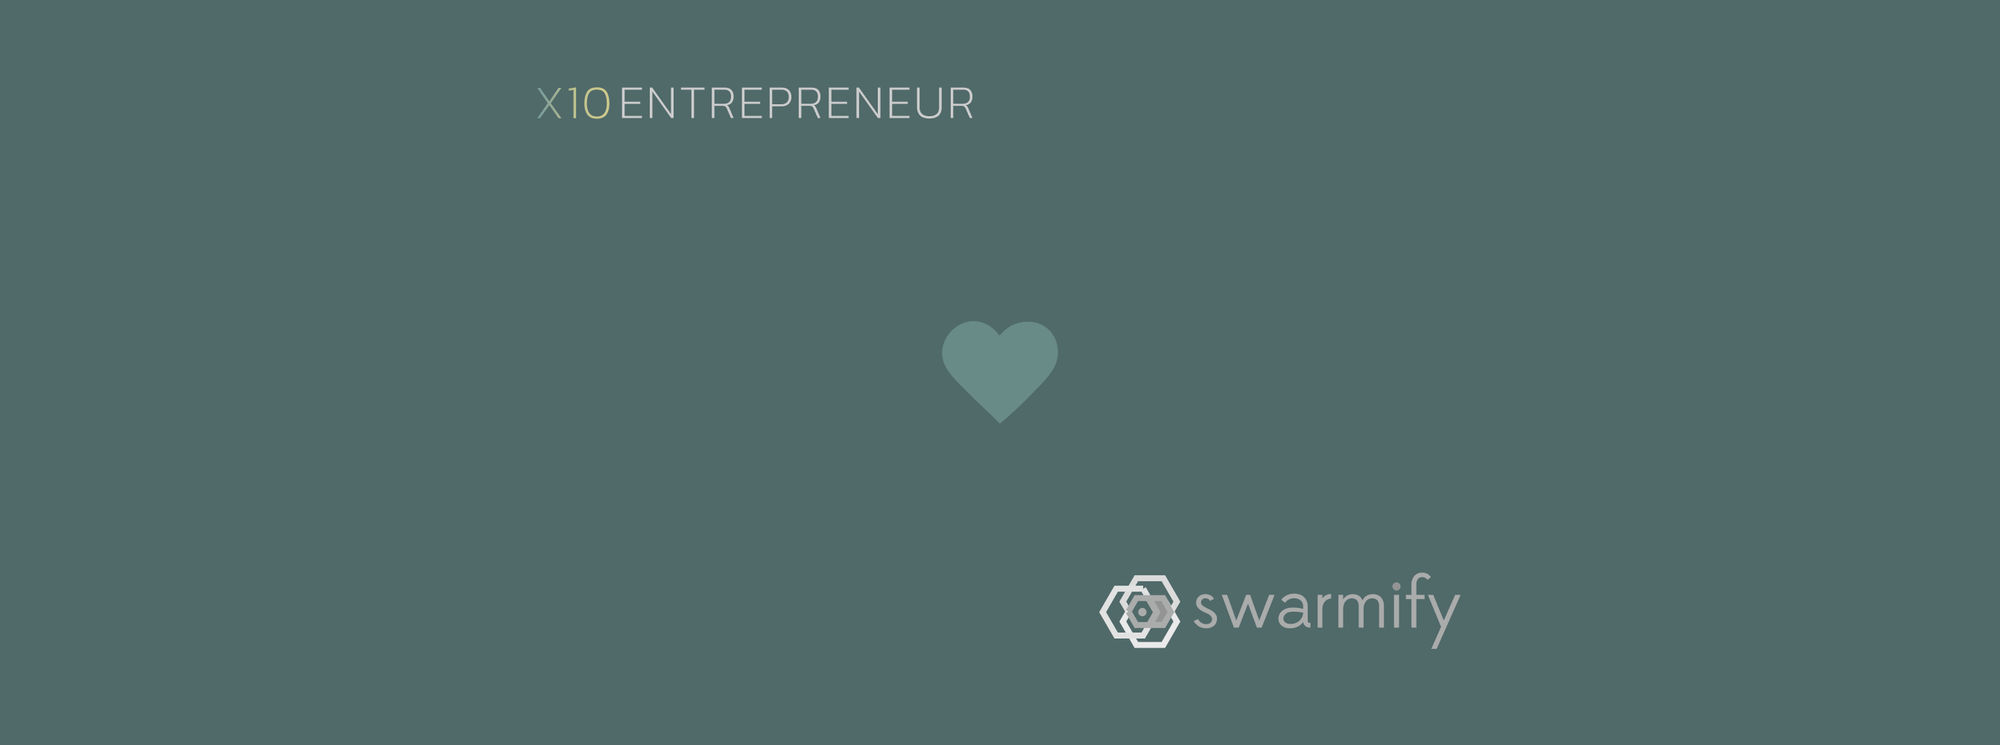 X10 Entrepreneur love Swarmify